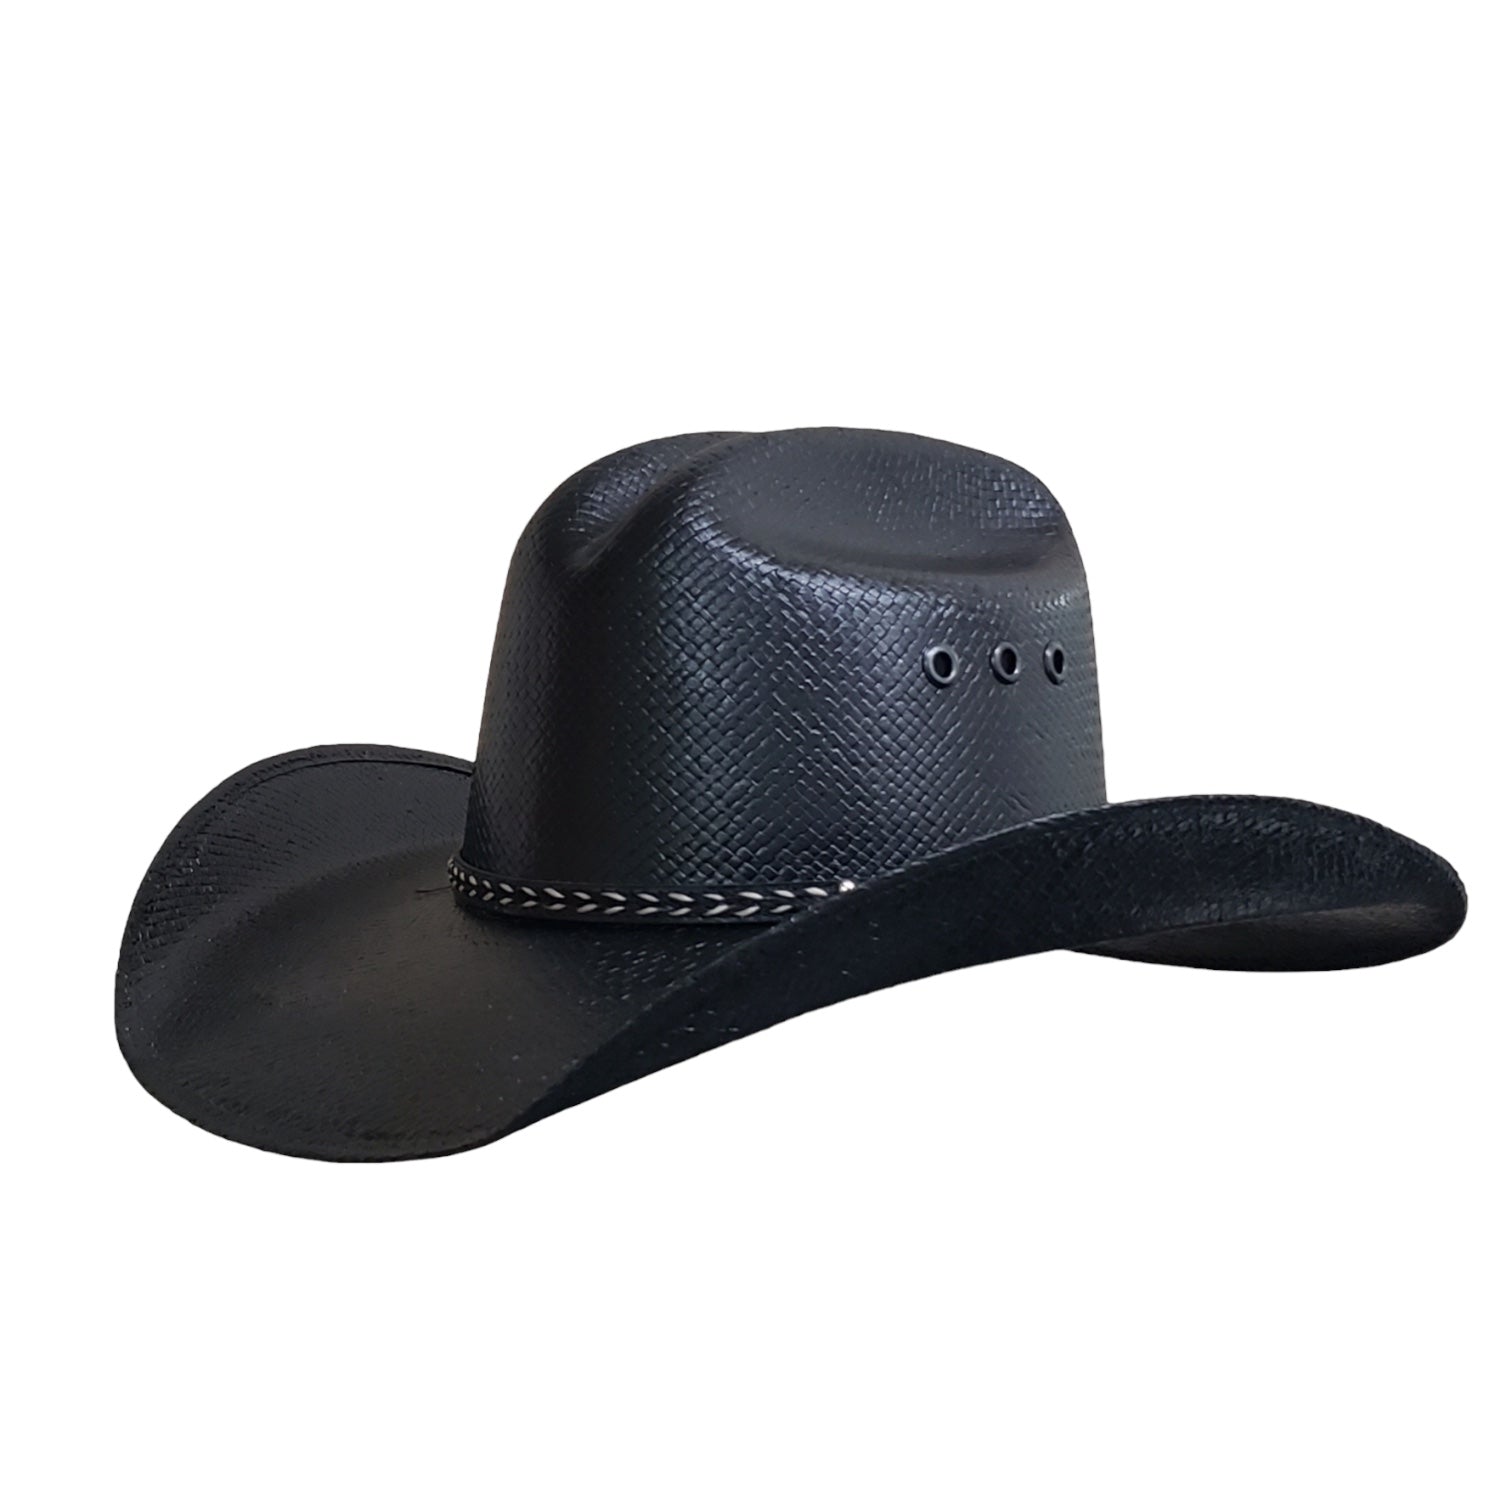 Tim Black Straw Shantung Cowboy Hat Medium Fits 7-1/8 to 7-1/4